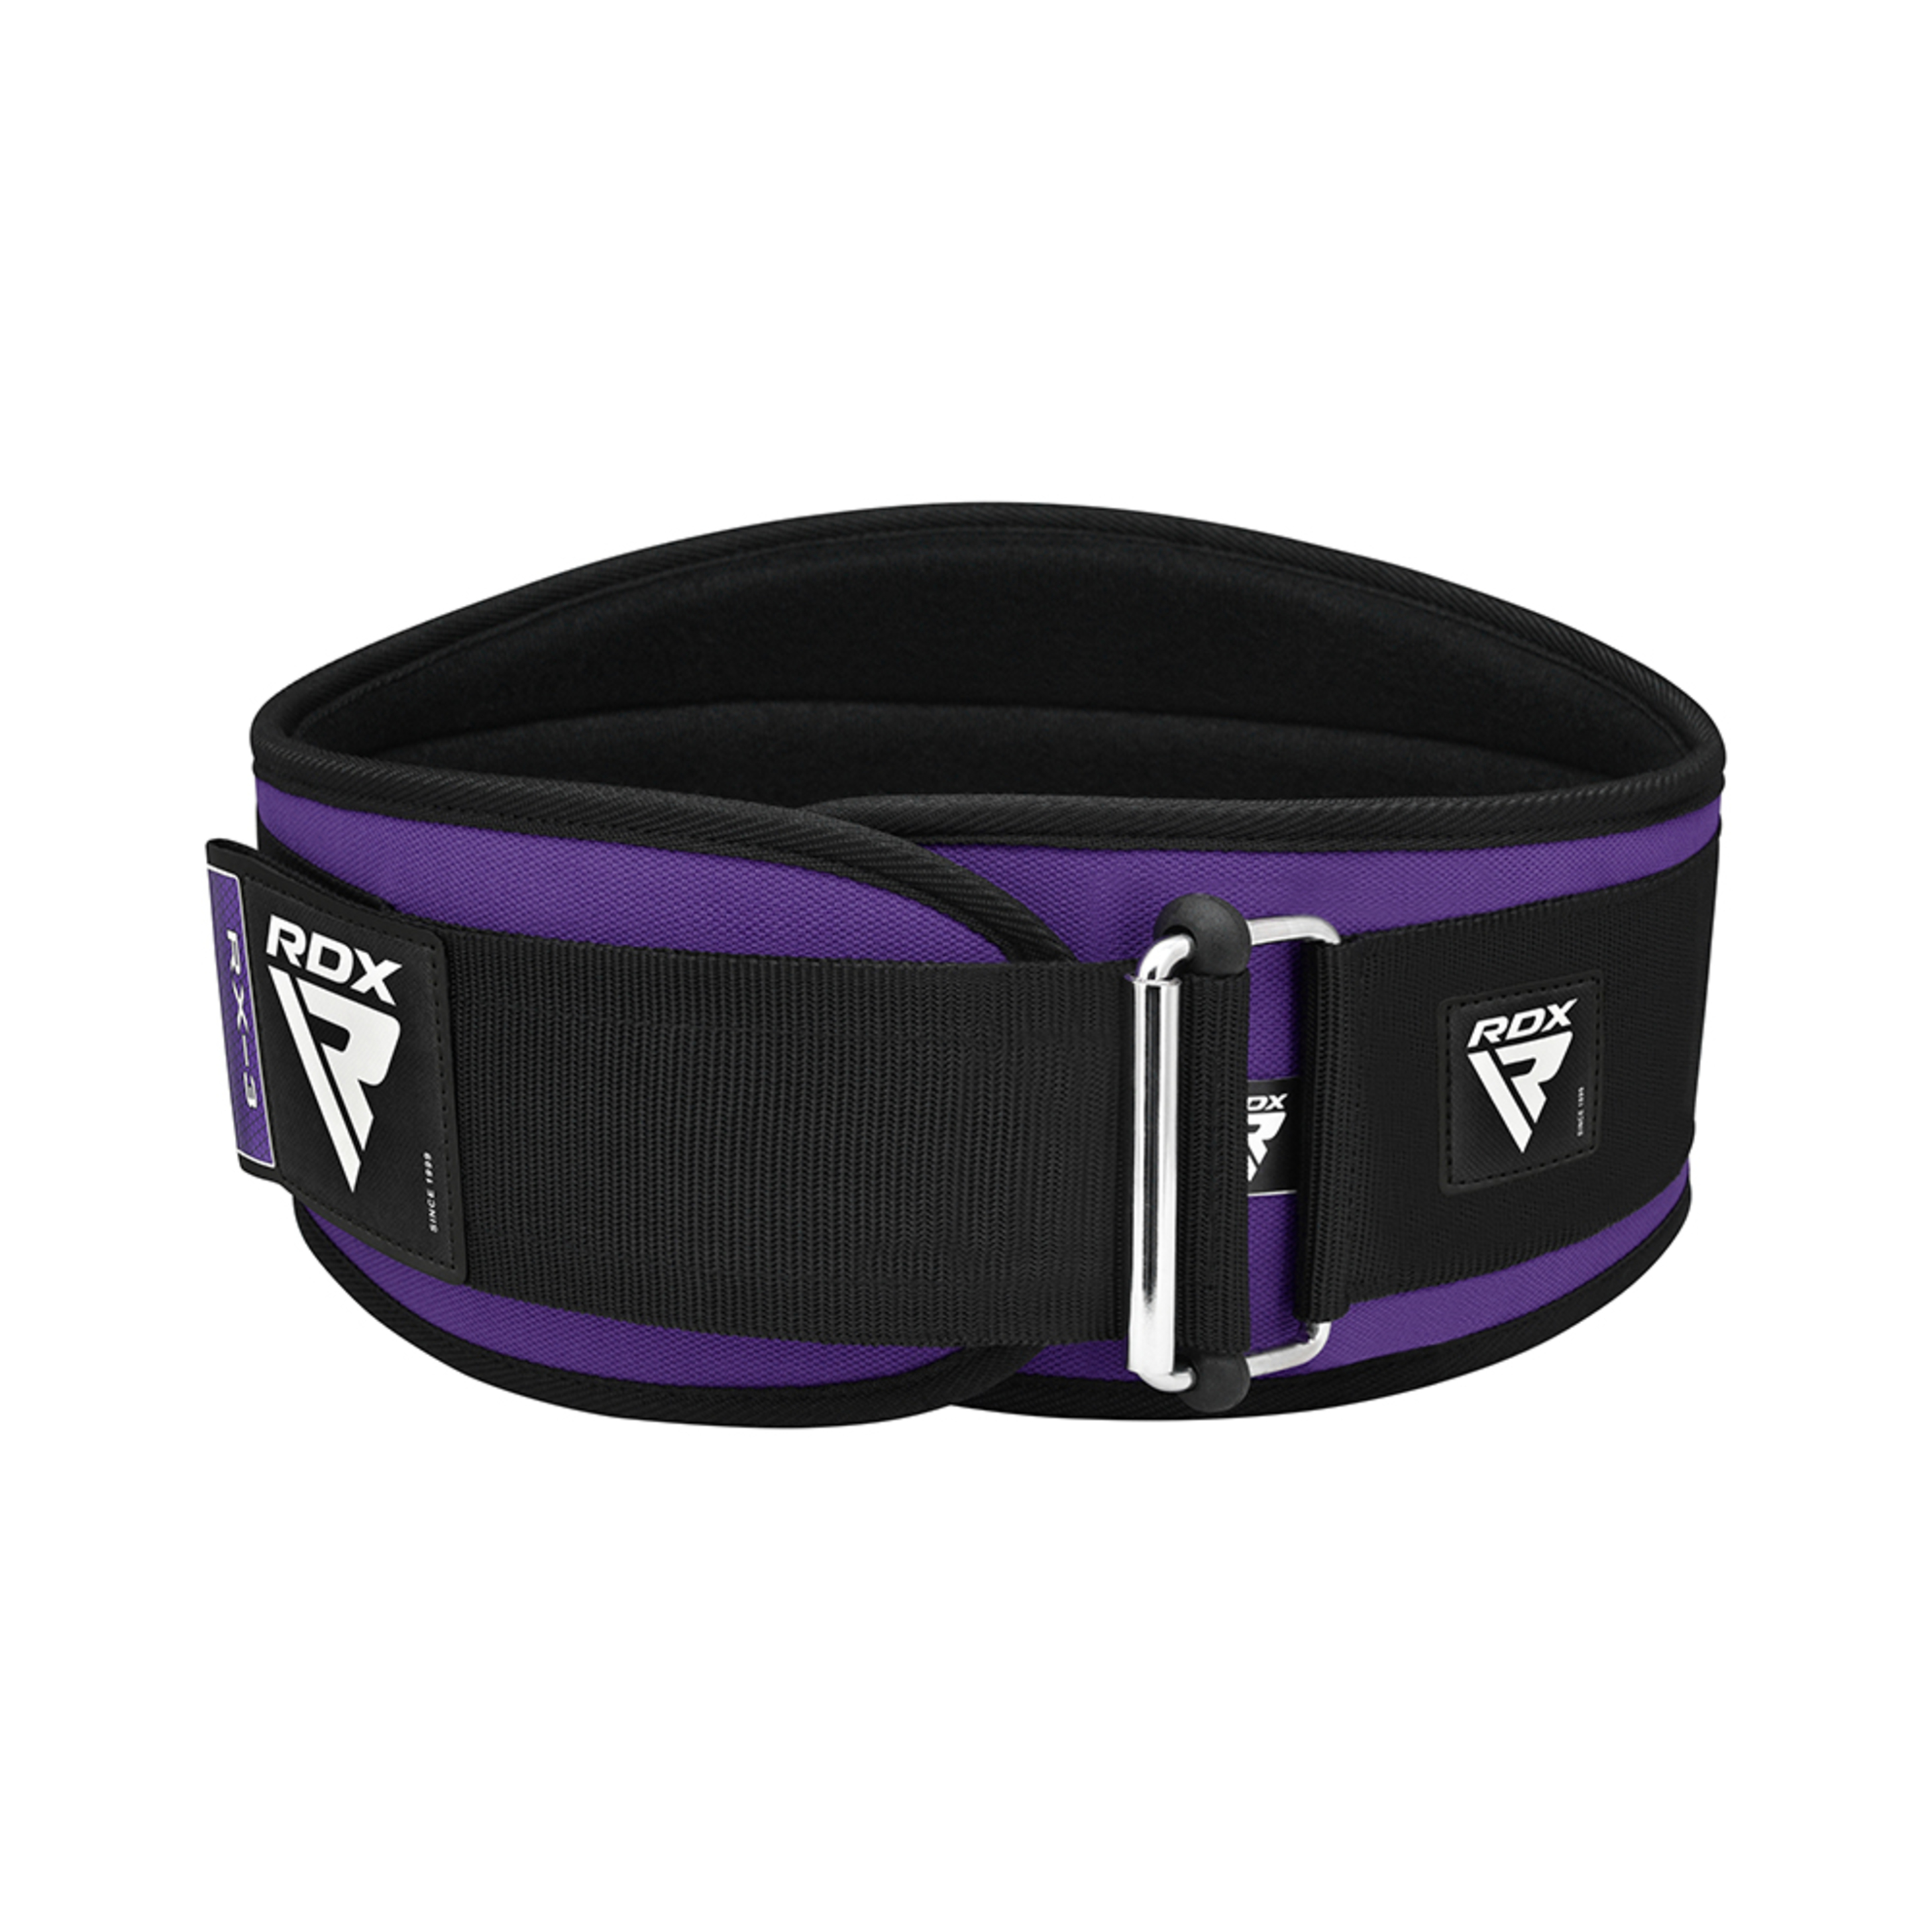 Cinturón De Fitness Rdx Wbe-rx3 - purpura - 